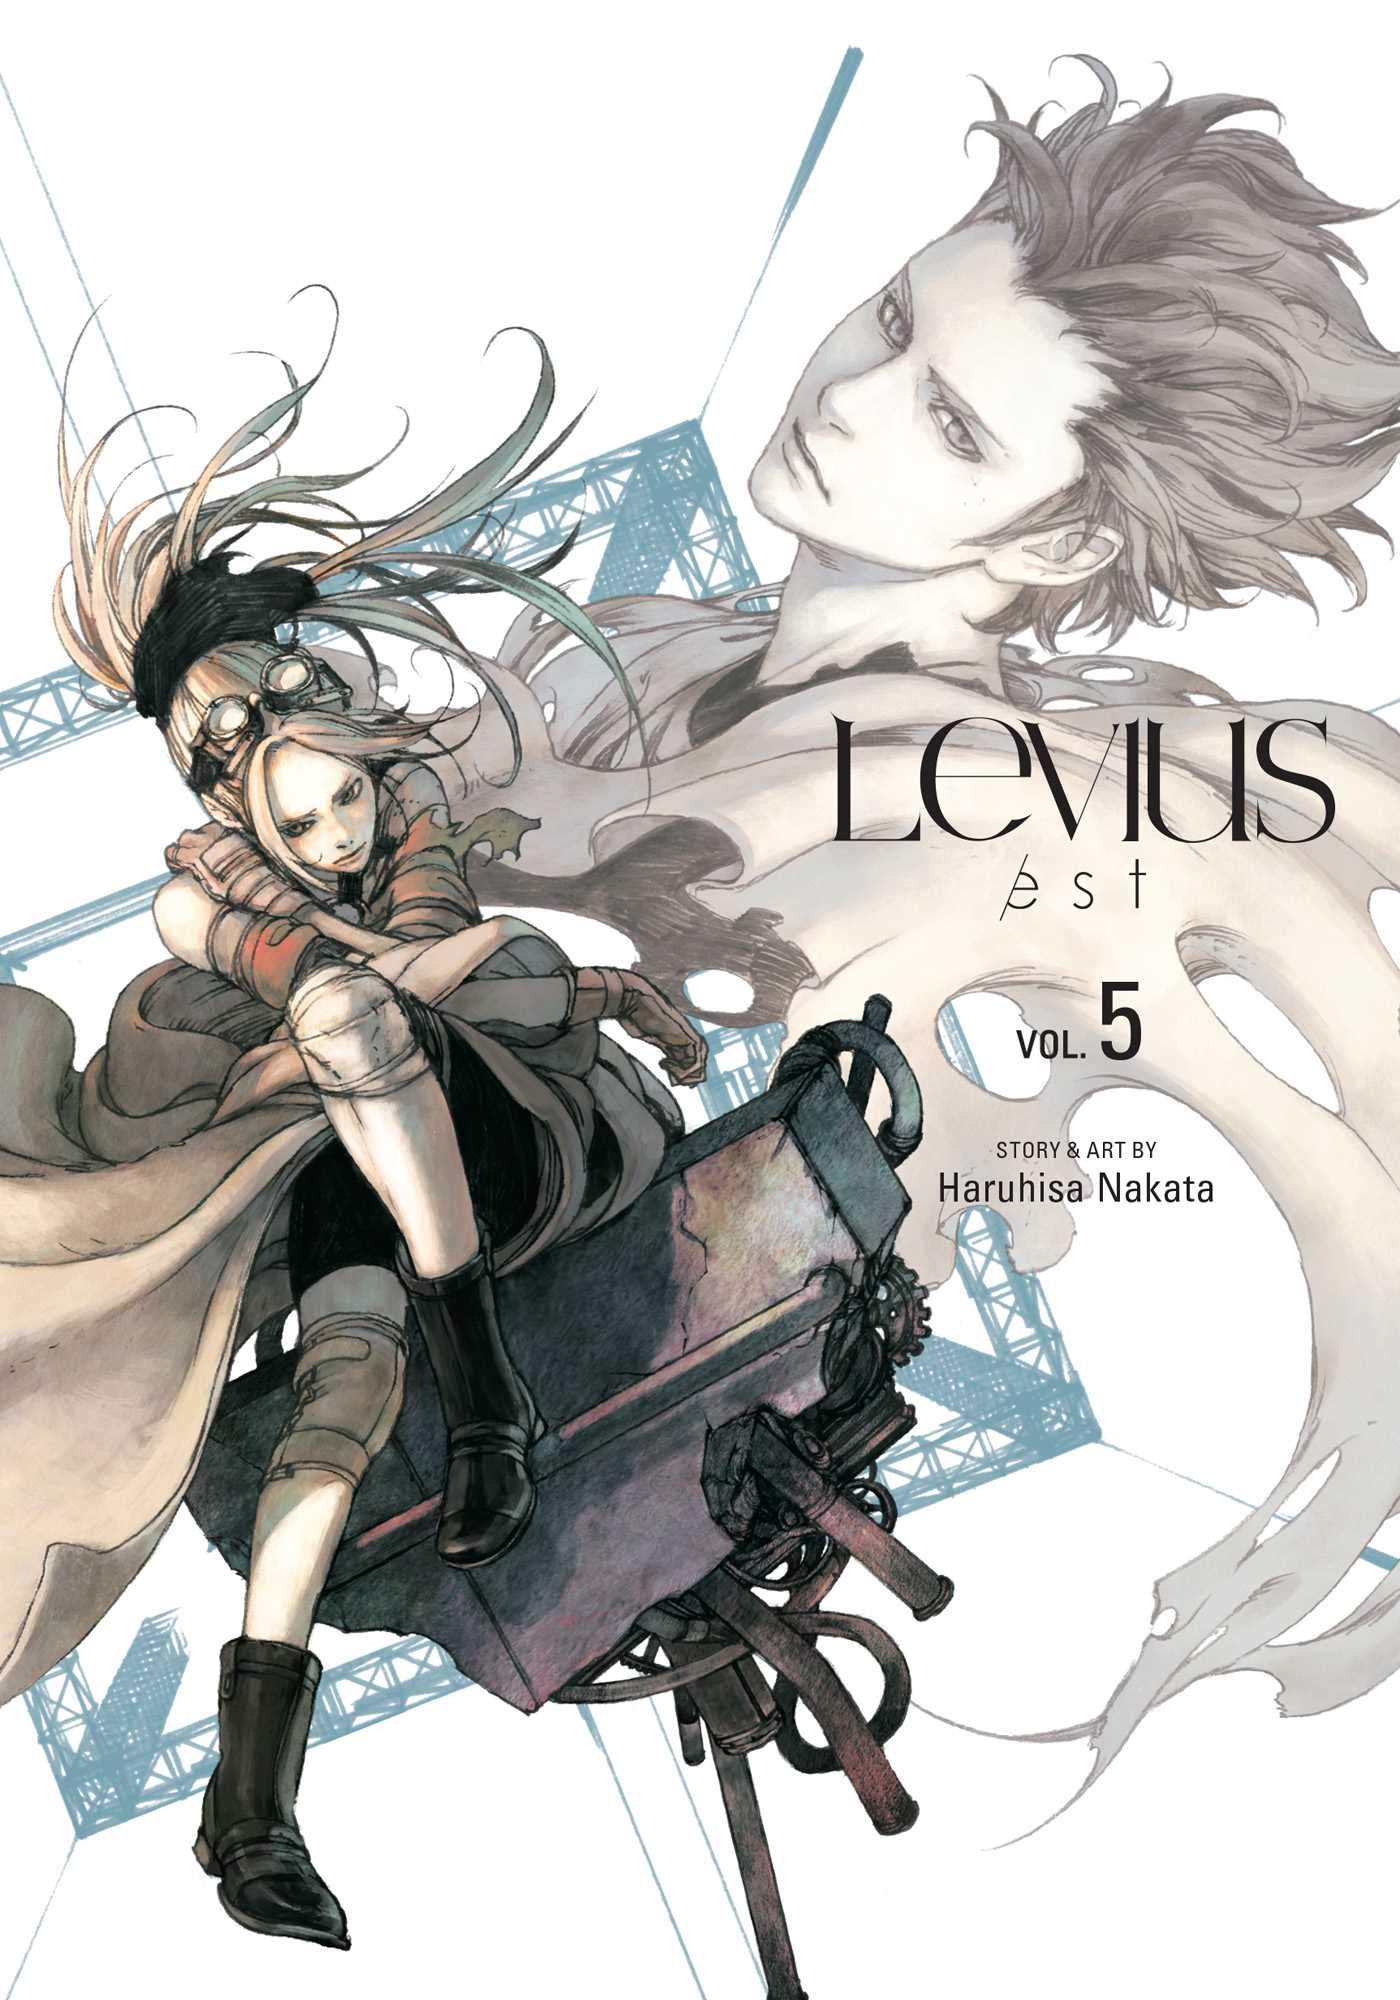 Levius/est - Volume 5 | Haruhisa Nakata